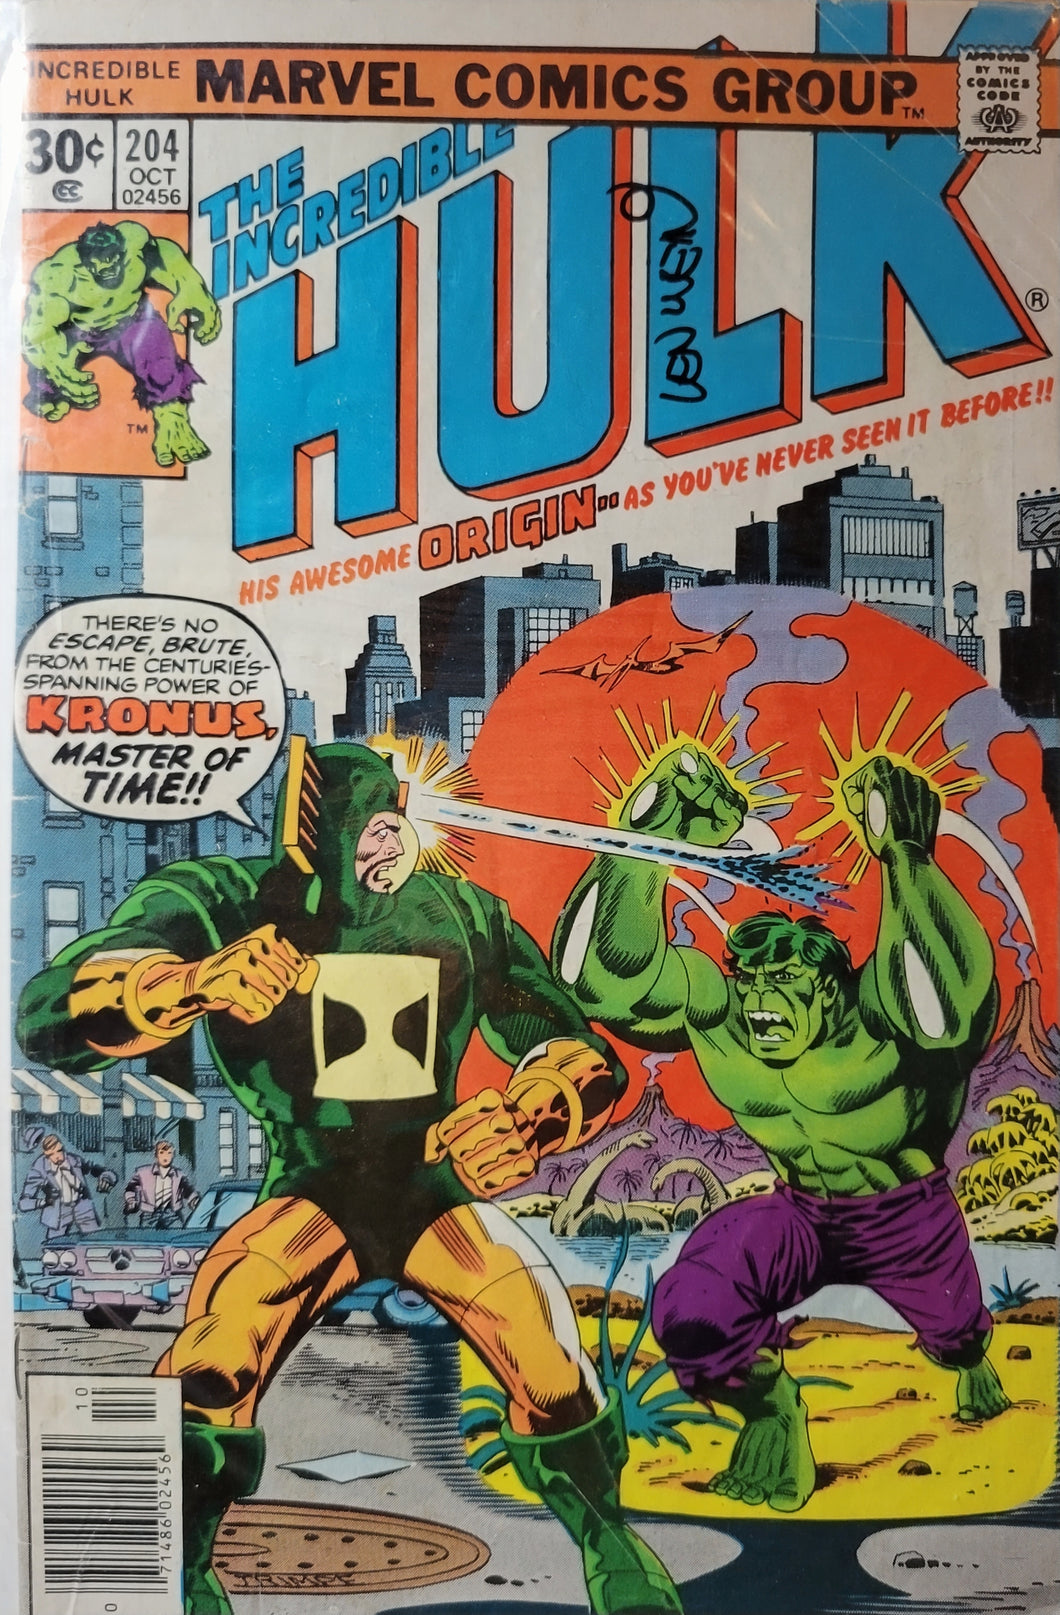 Incredible Hulk #204 Signed by Len Wein w/COA